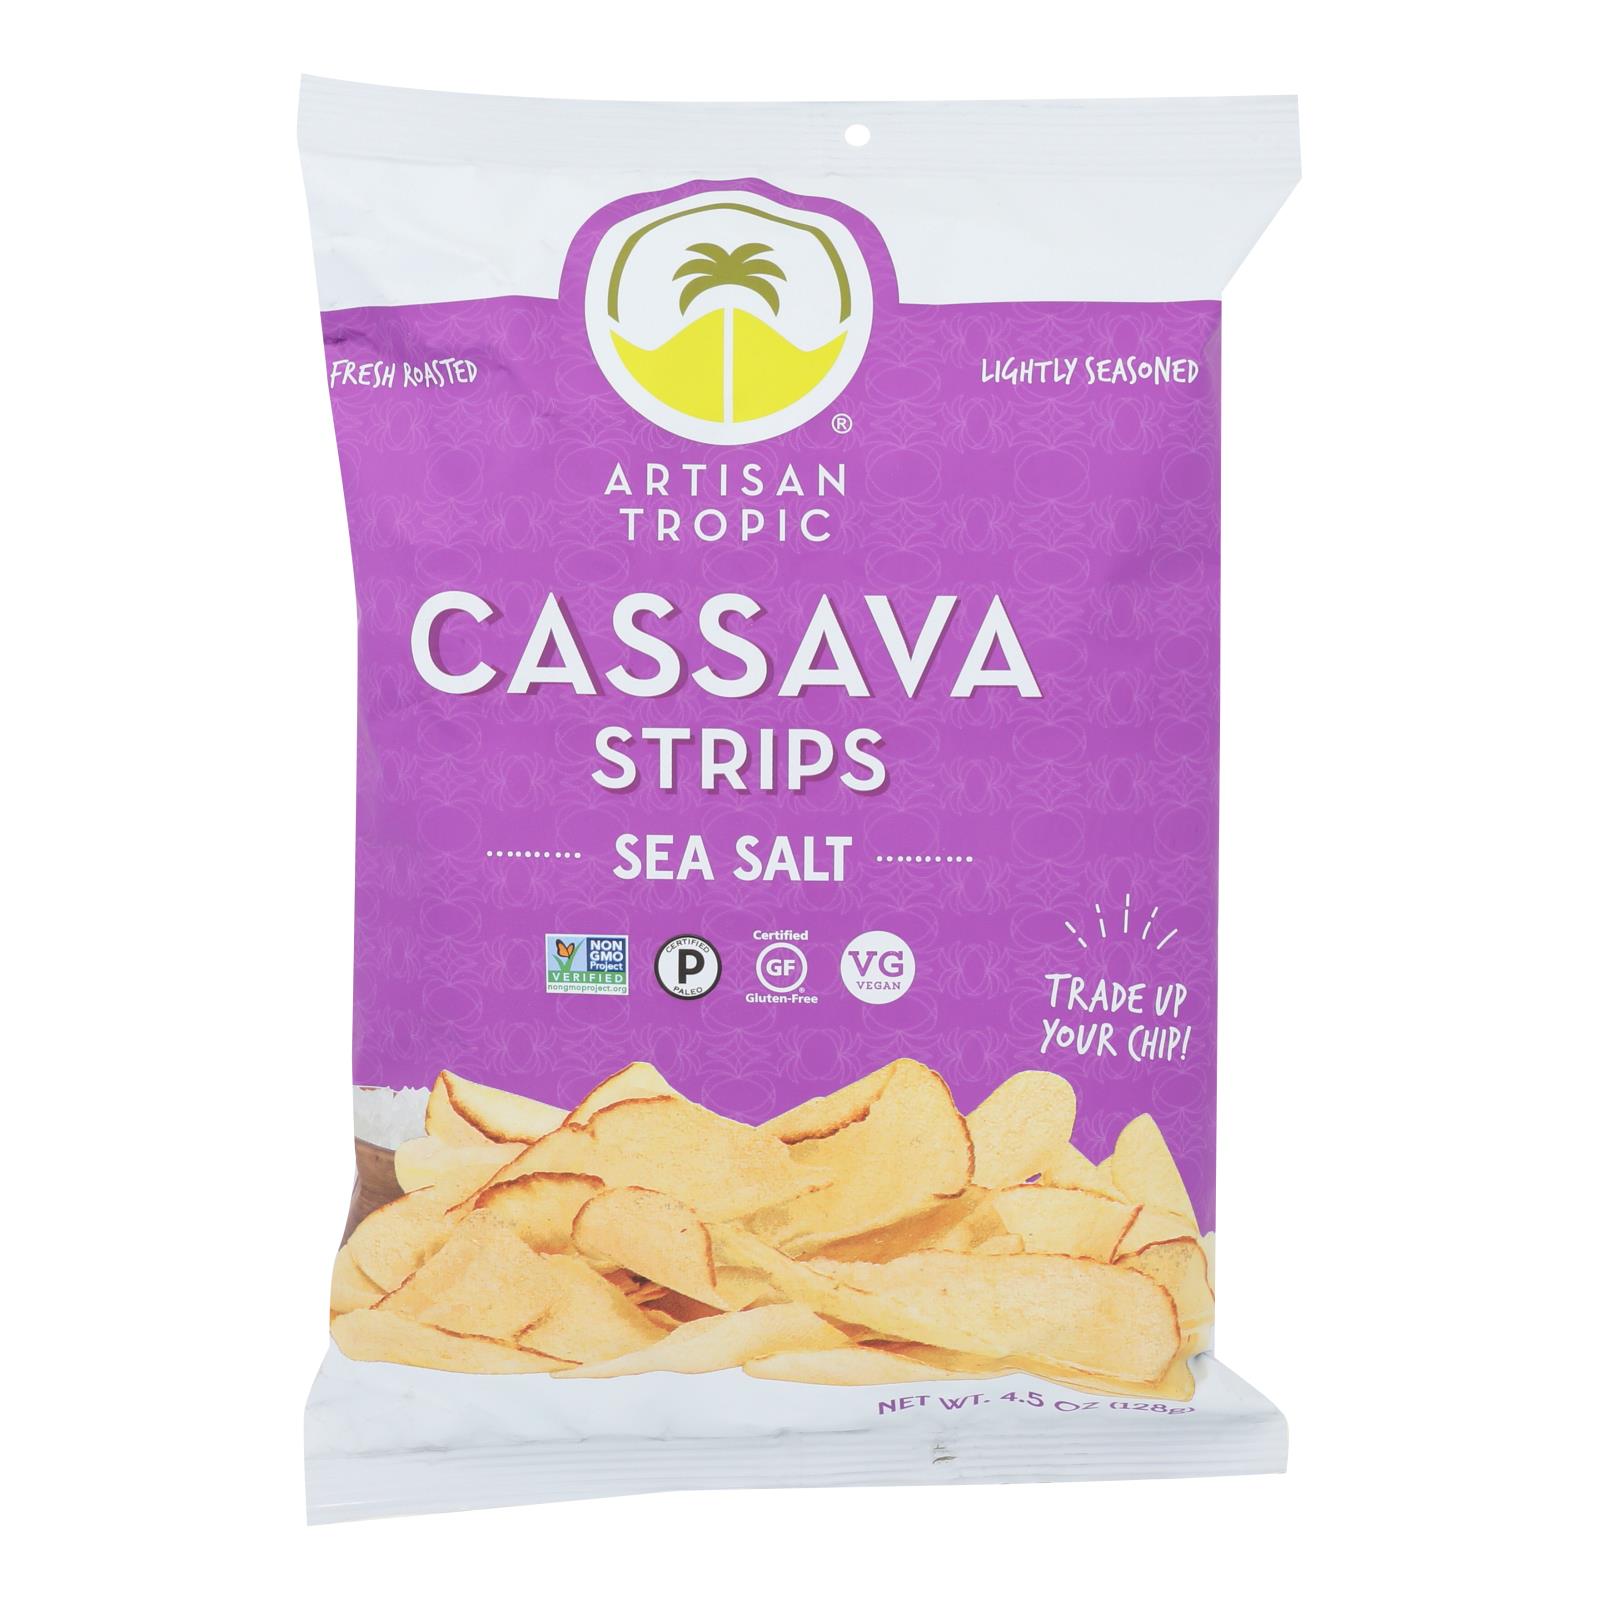 Artisan Tropic Cassava Strips - Sea Salt - 12개 묶음상품 - 4.5 oz.